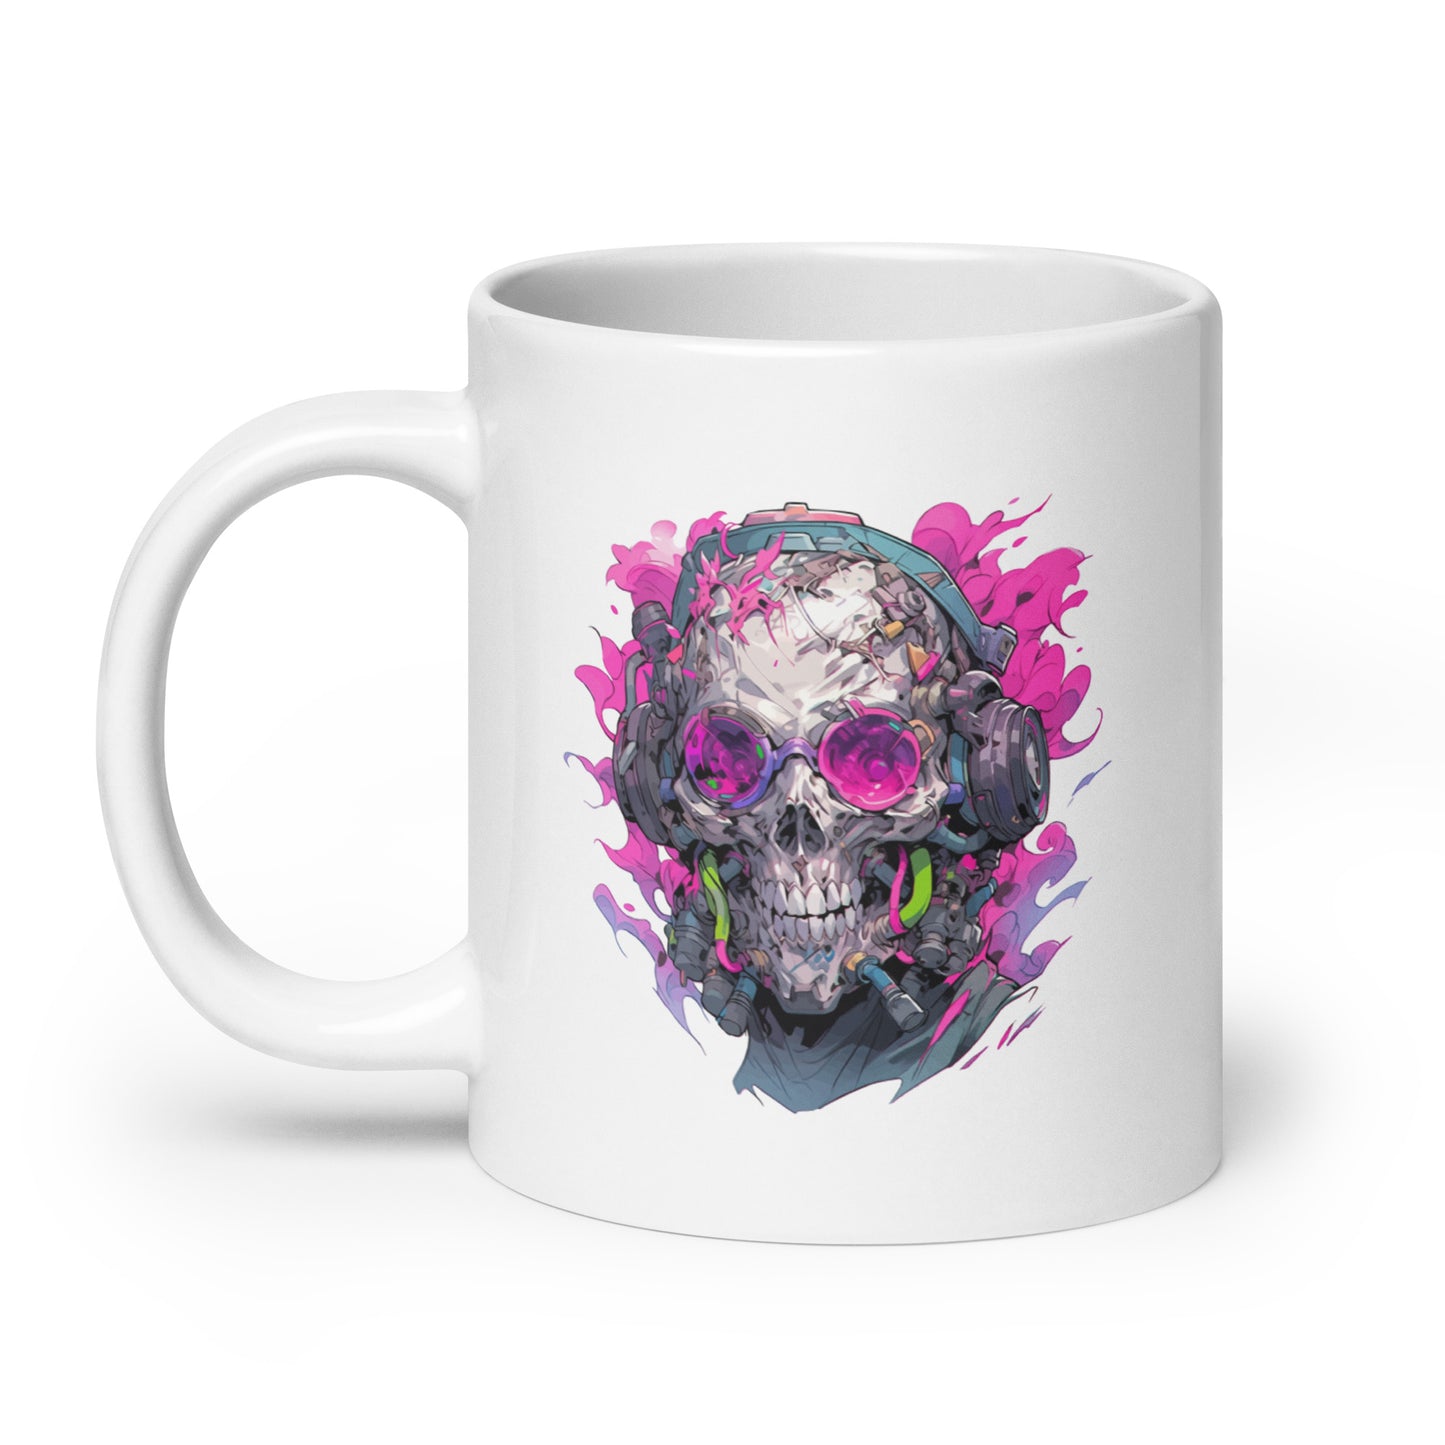 Cyber zombie in pink glasses, Crazy zombie illustration, Horror music fantasy, Cyberpunk skull in headphones, Fantastic head bones - White glossy mug